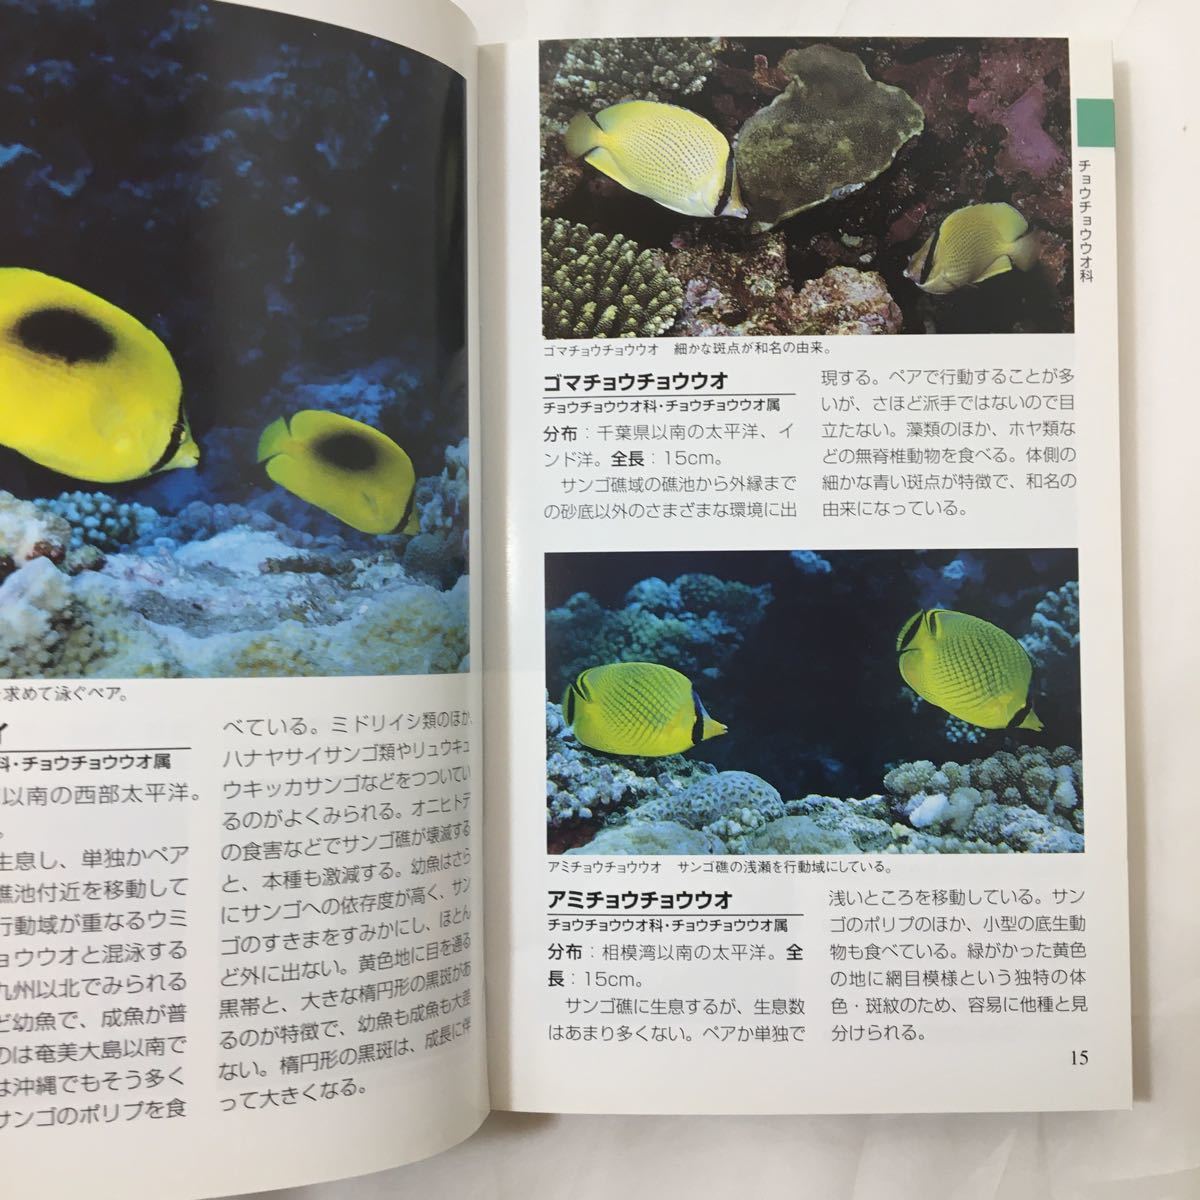 zaa-024★海水魚ガイドブック―サンゴ礁の魚たちのすべてがわかる 　大方 洋二 (著)(日本語) 単行本 1998/7/1